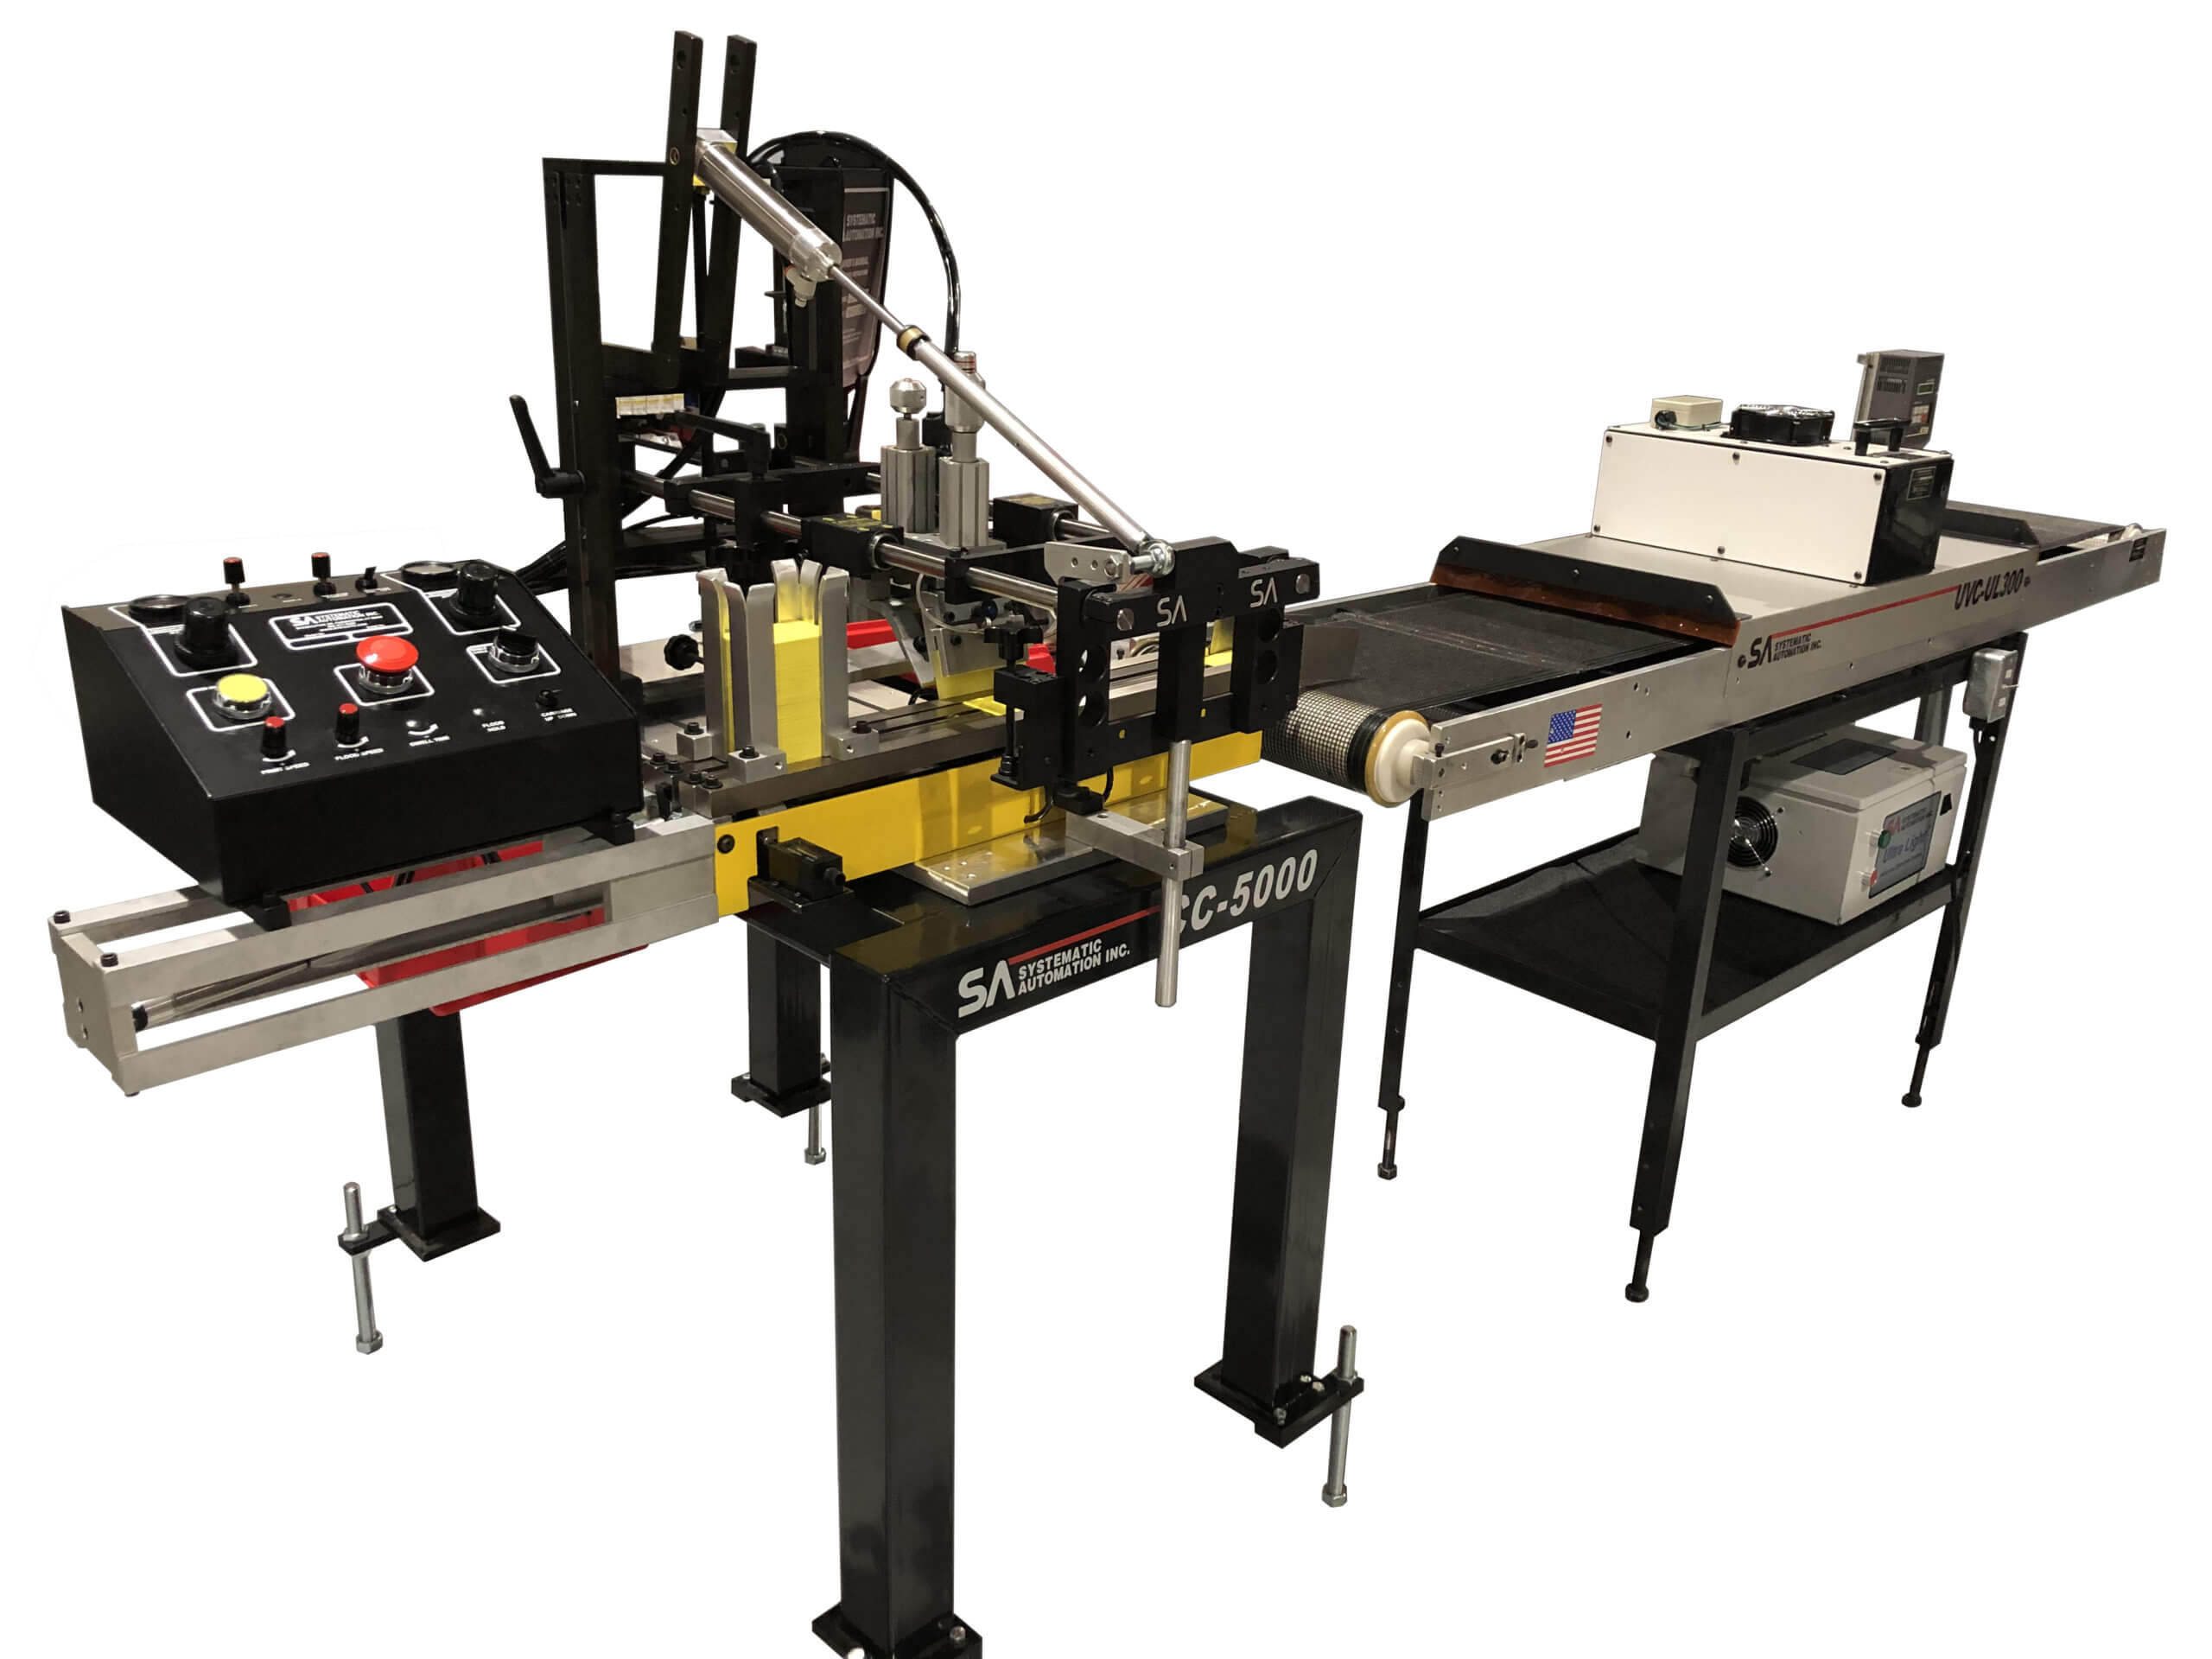 CC-5000 automatic screen printing machine